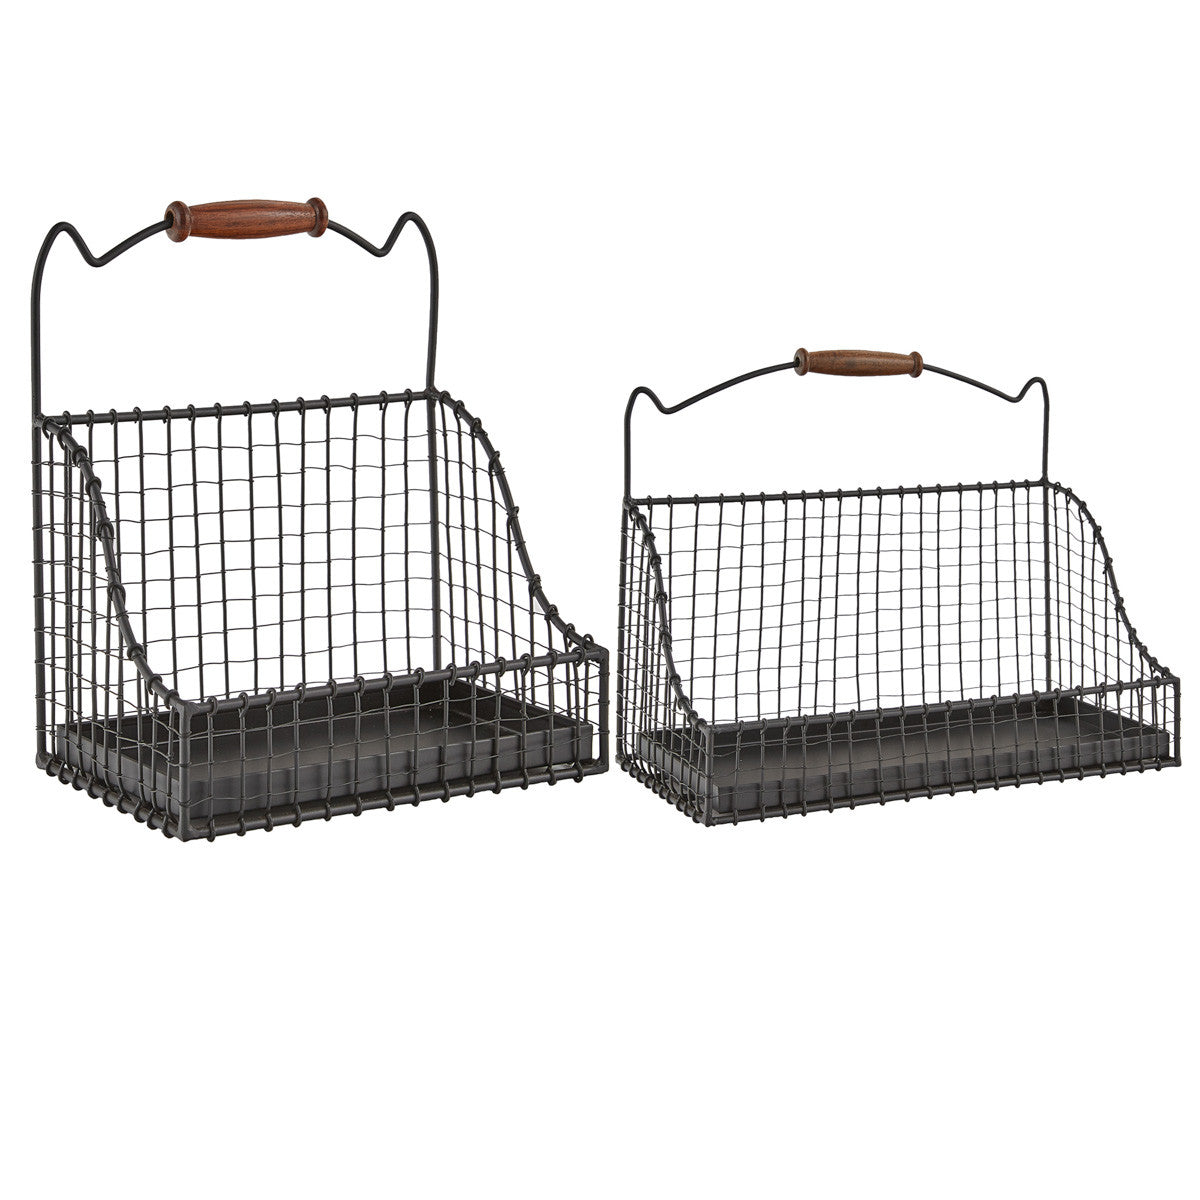 Hanging Wire Baskets - Set of 2 Park Designs